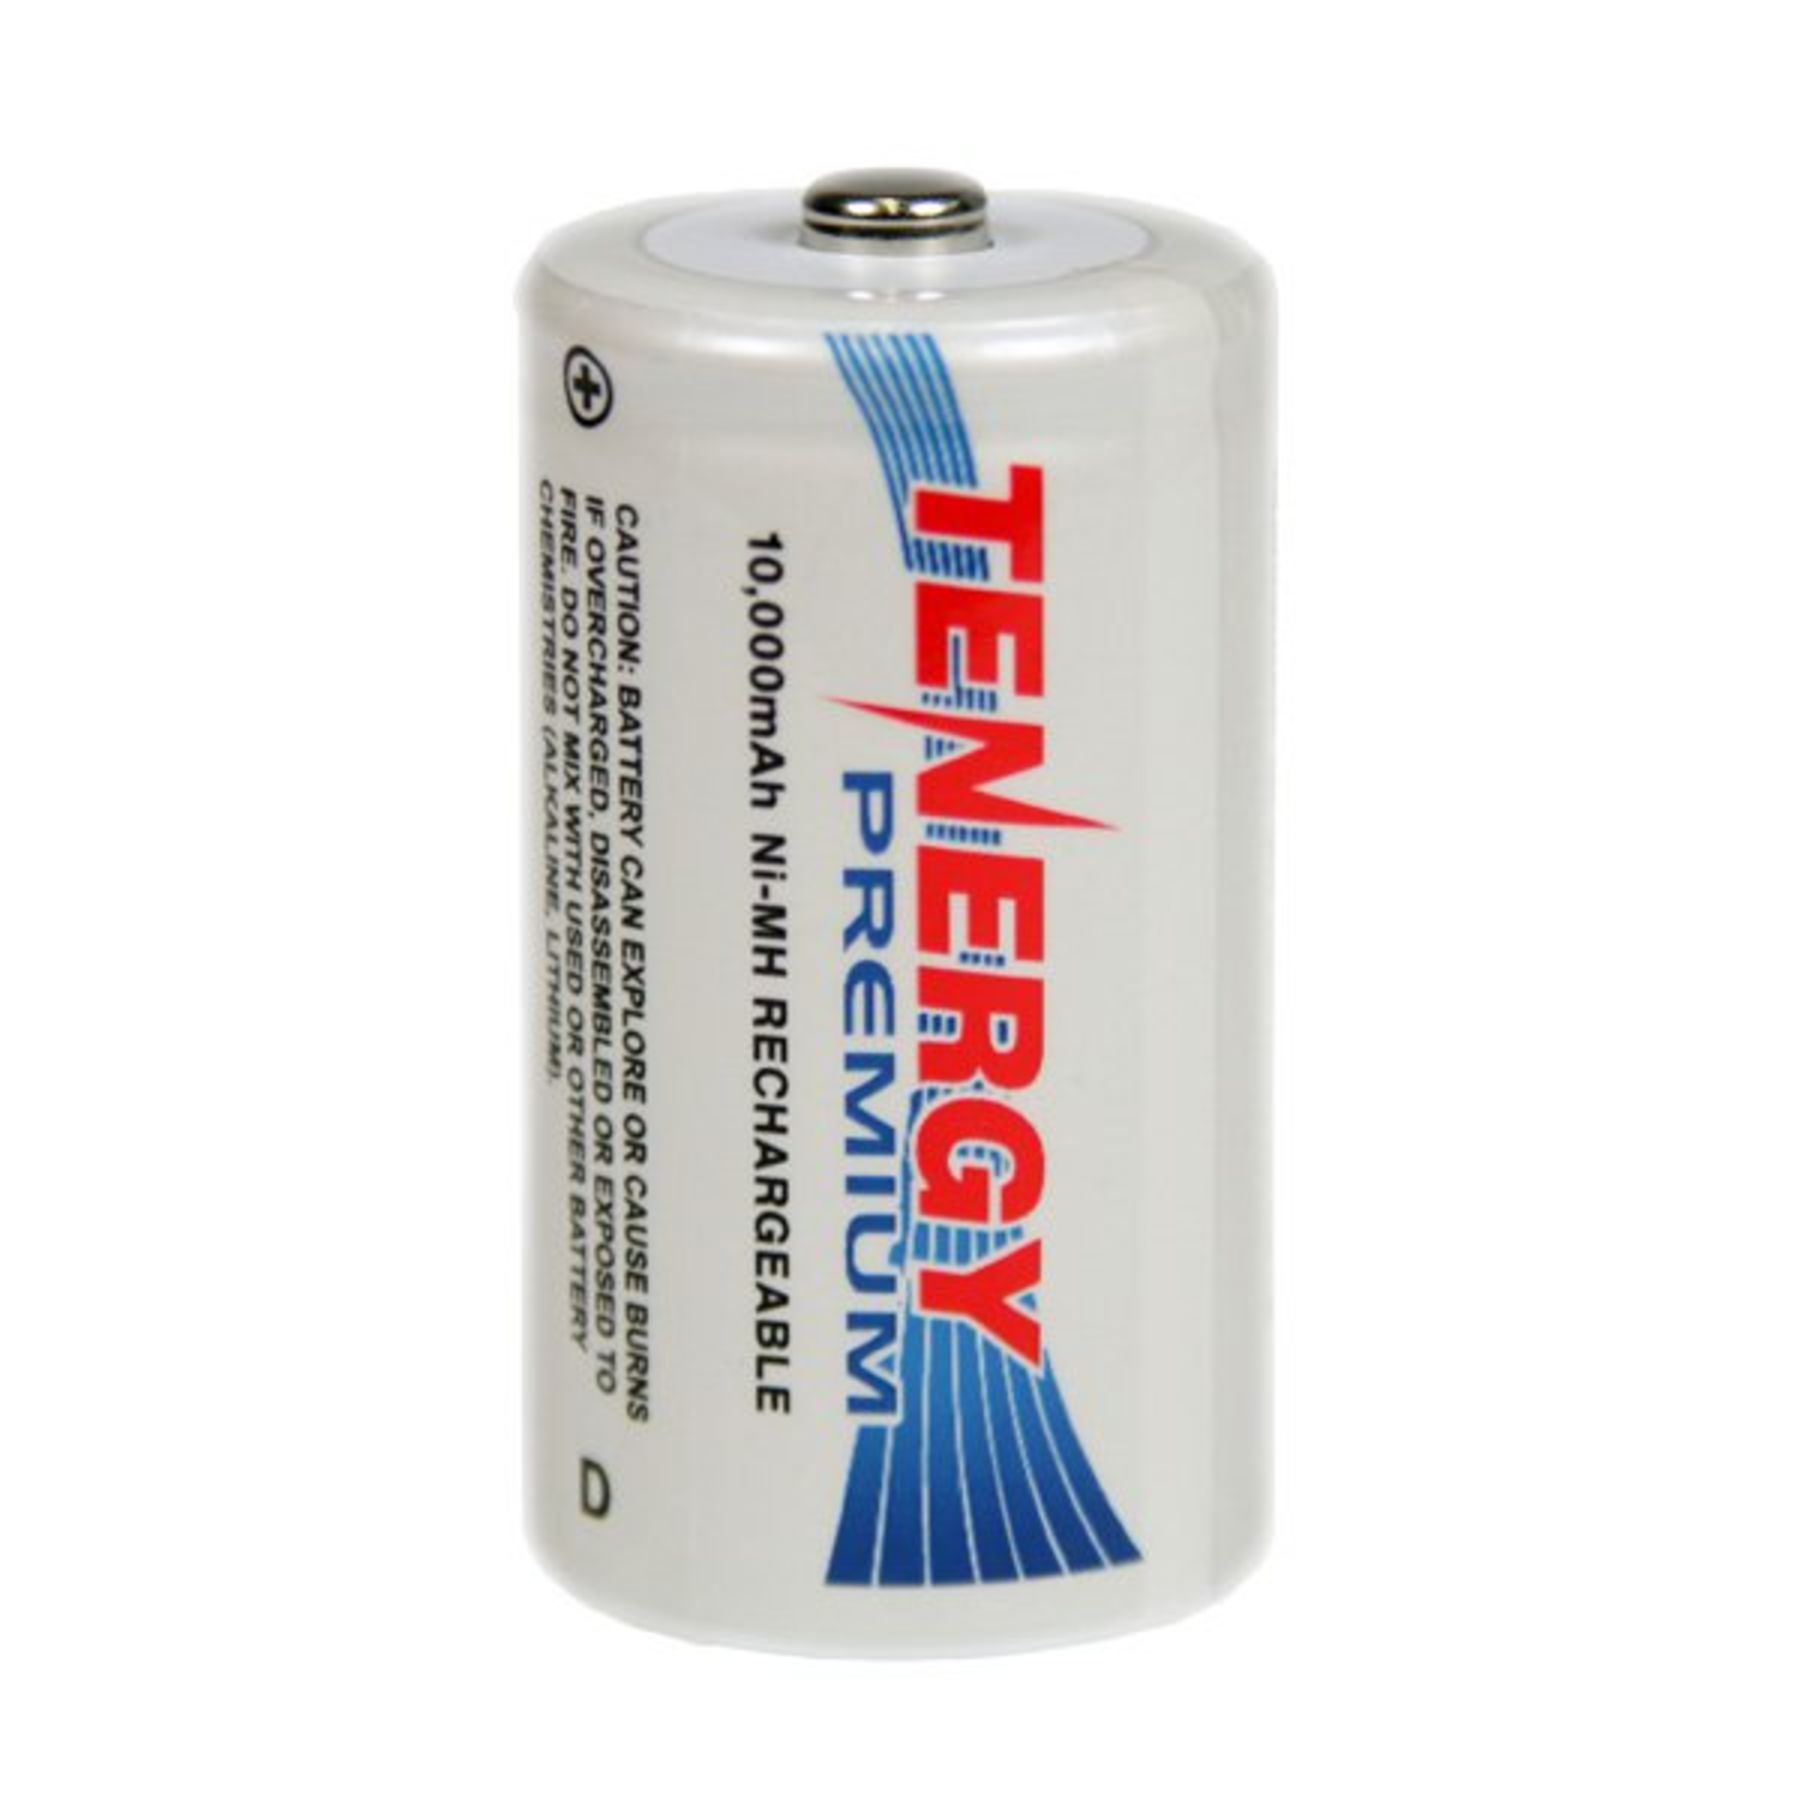 Tenergy Premium D Cell 10,000 mAh NiMH Rechargeable Battery - D-10105